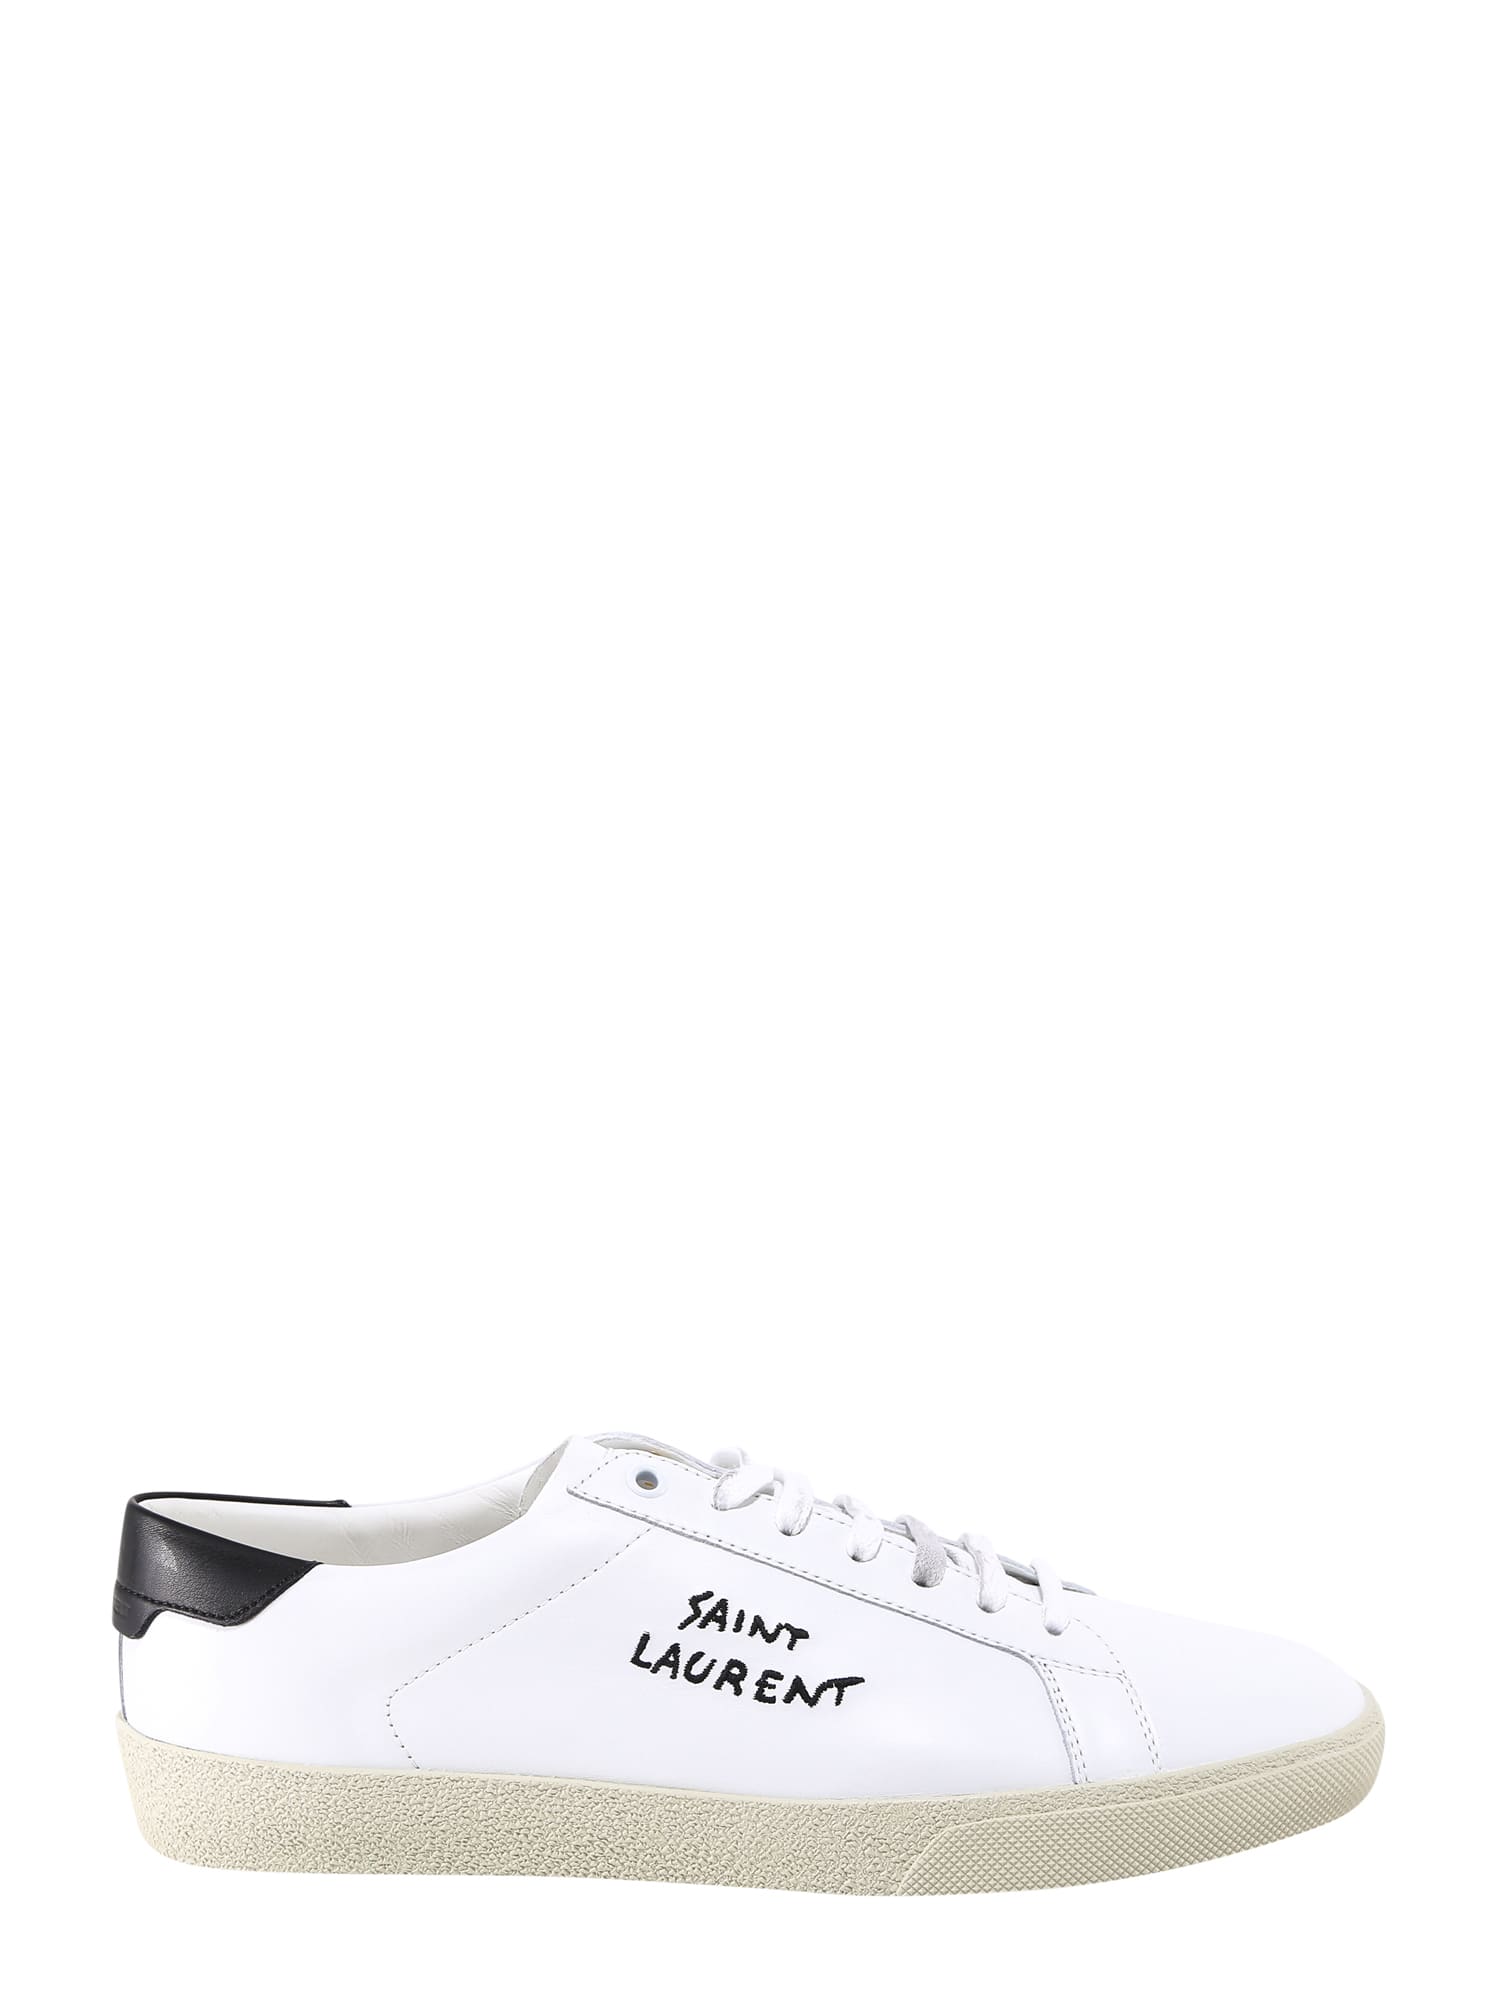 Saint Laurent Signature Low Top Sneakers